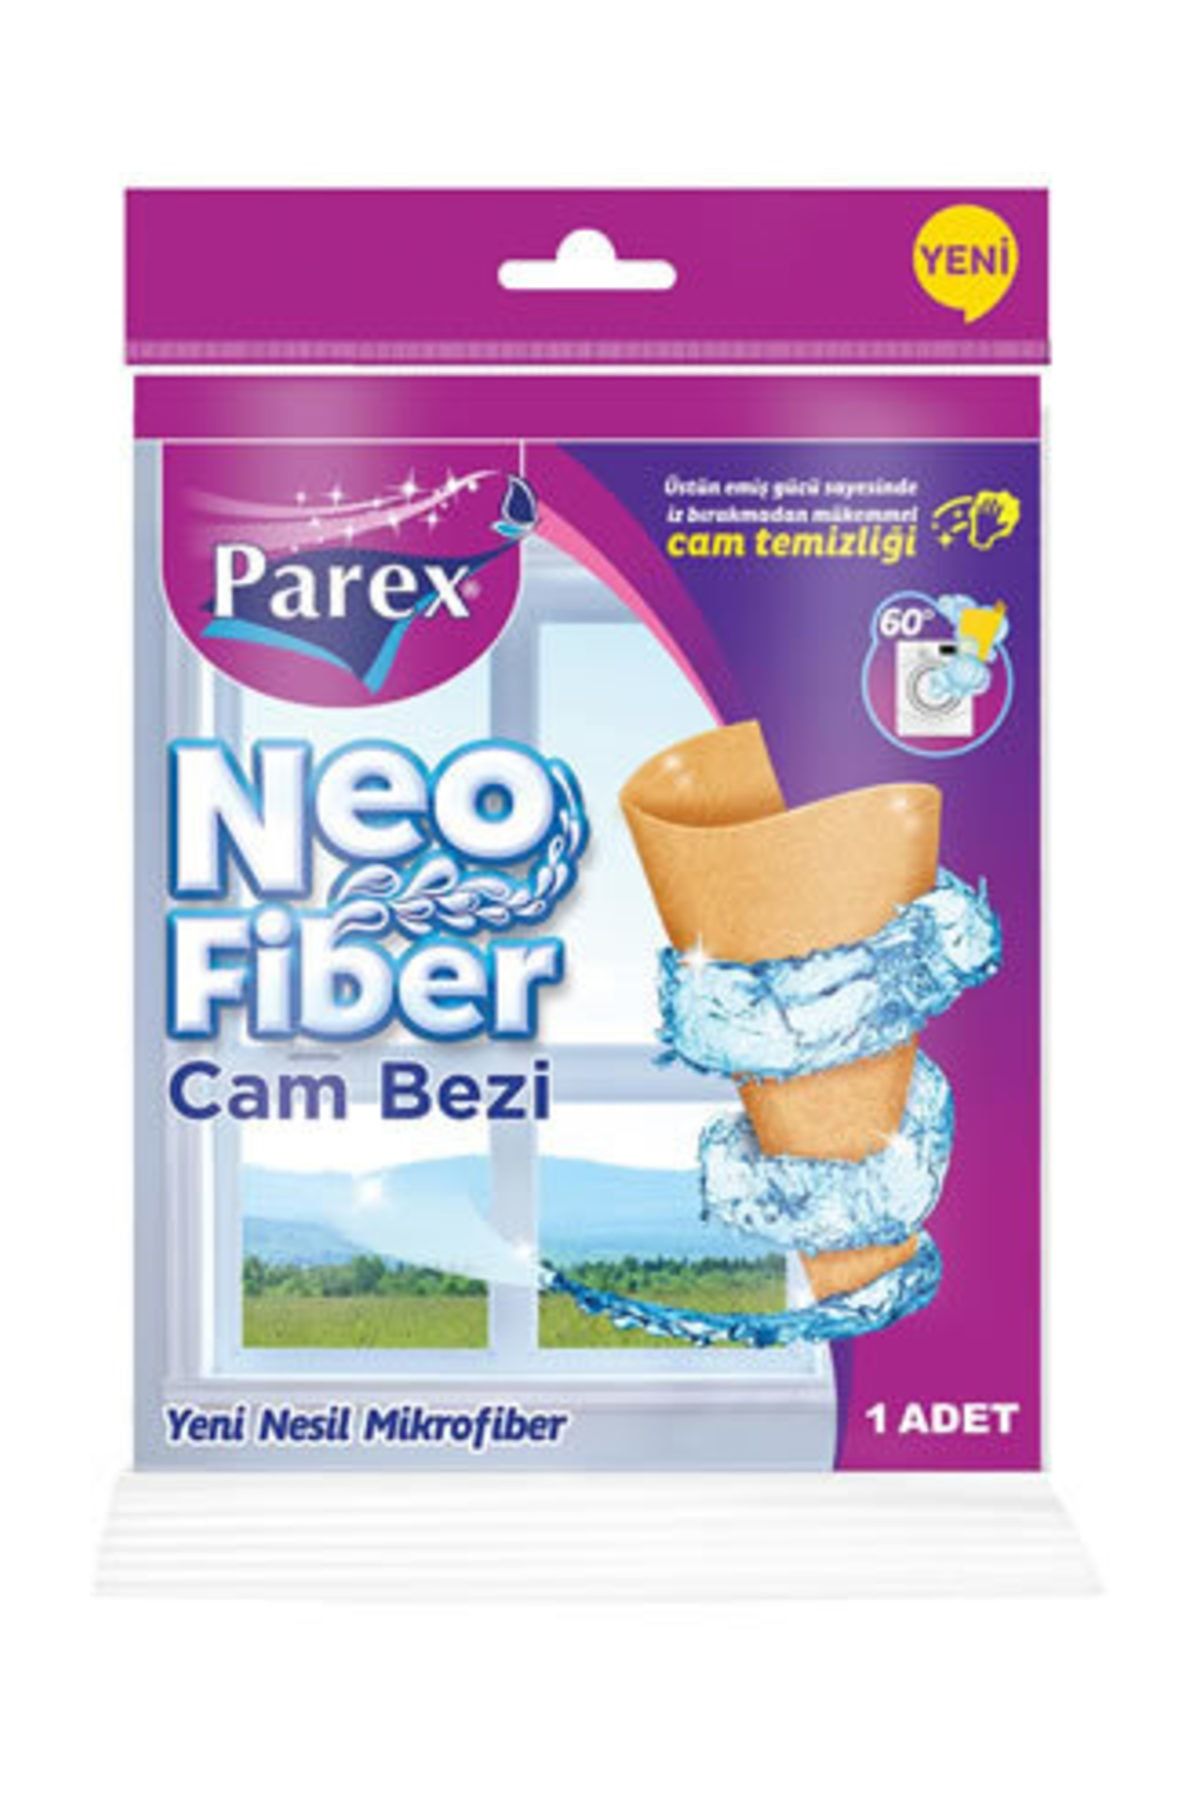 Parex Neofiber Cam Bezi